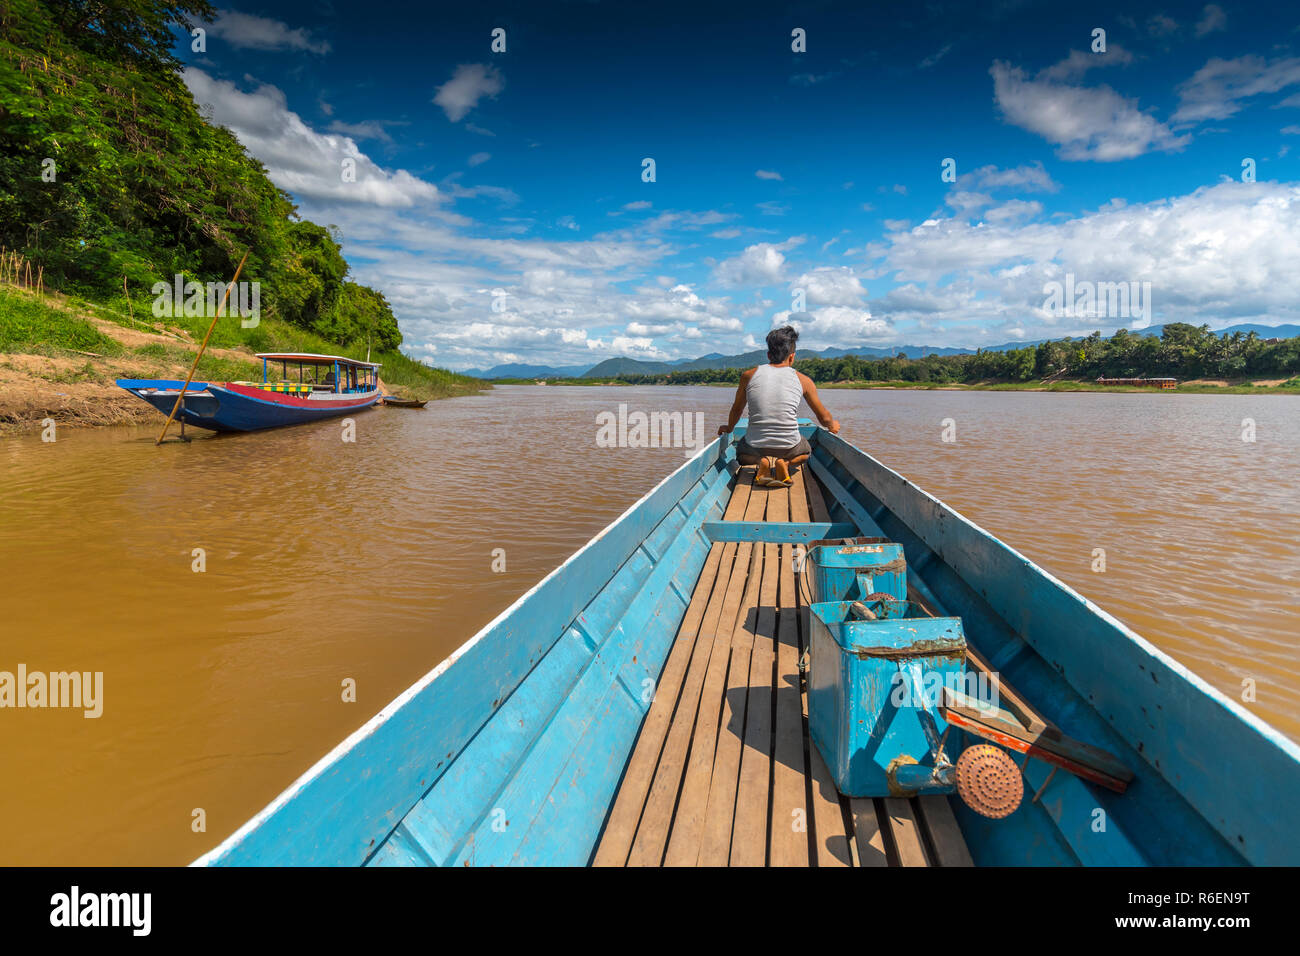 Tourist River Boat On The Mekong River, Luang Prabang, Laos, Asia Stock Photo